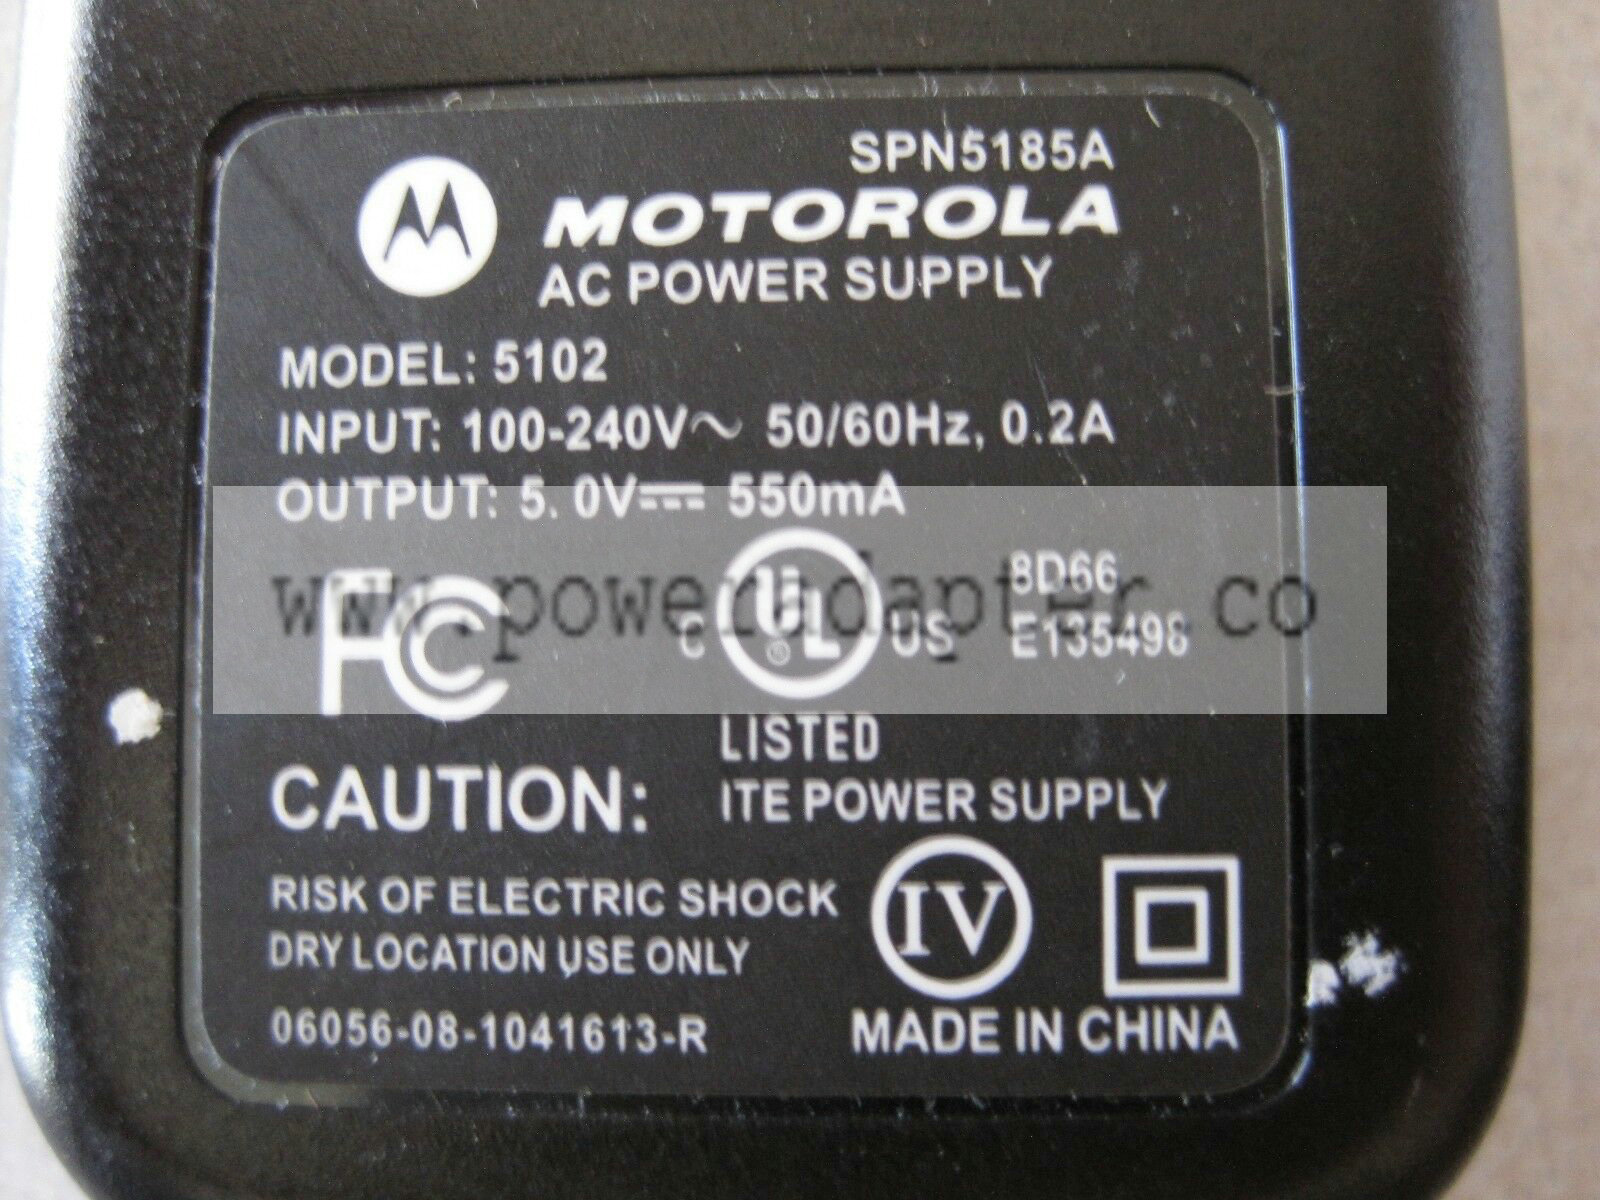 Motorola Adapter Model: 5102, 5V, 550mA Motorola Adapter Model: 5102 Output: 5V, 550mA like new condition - Click Image to Close